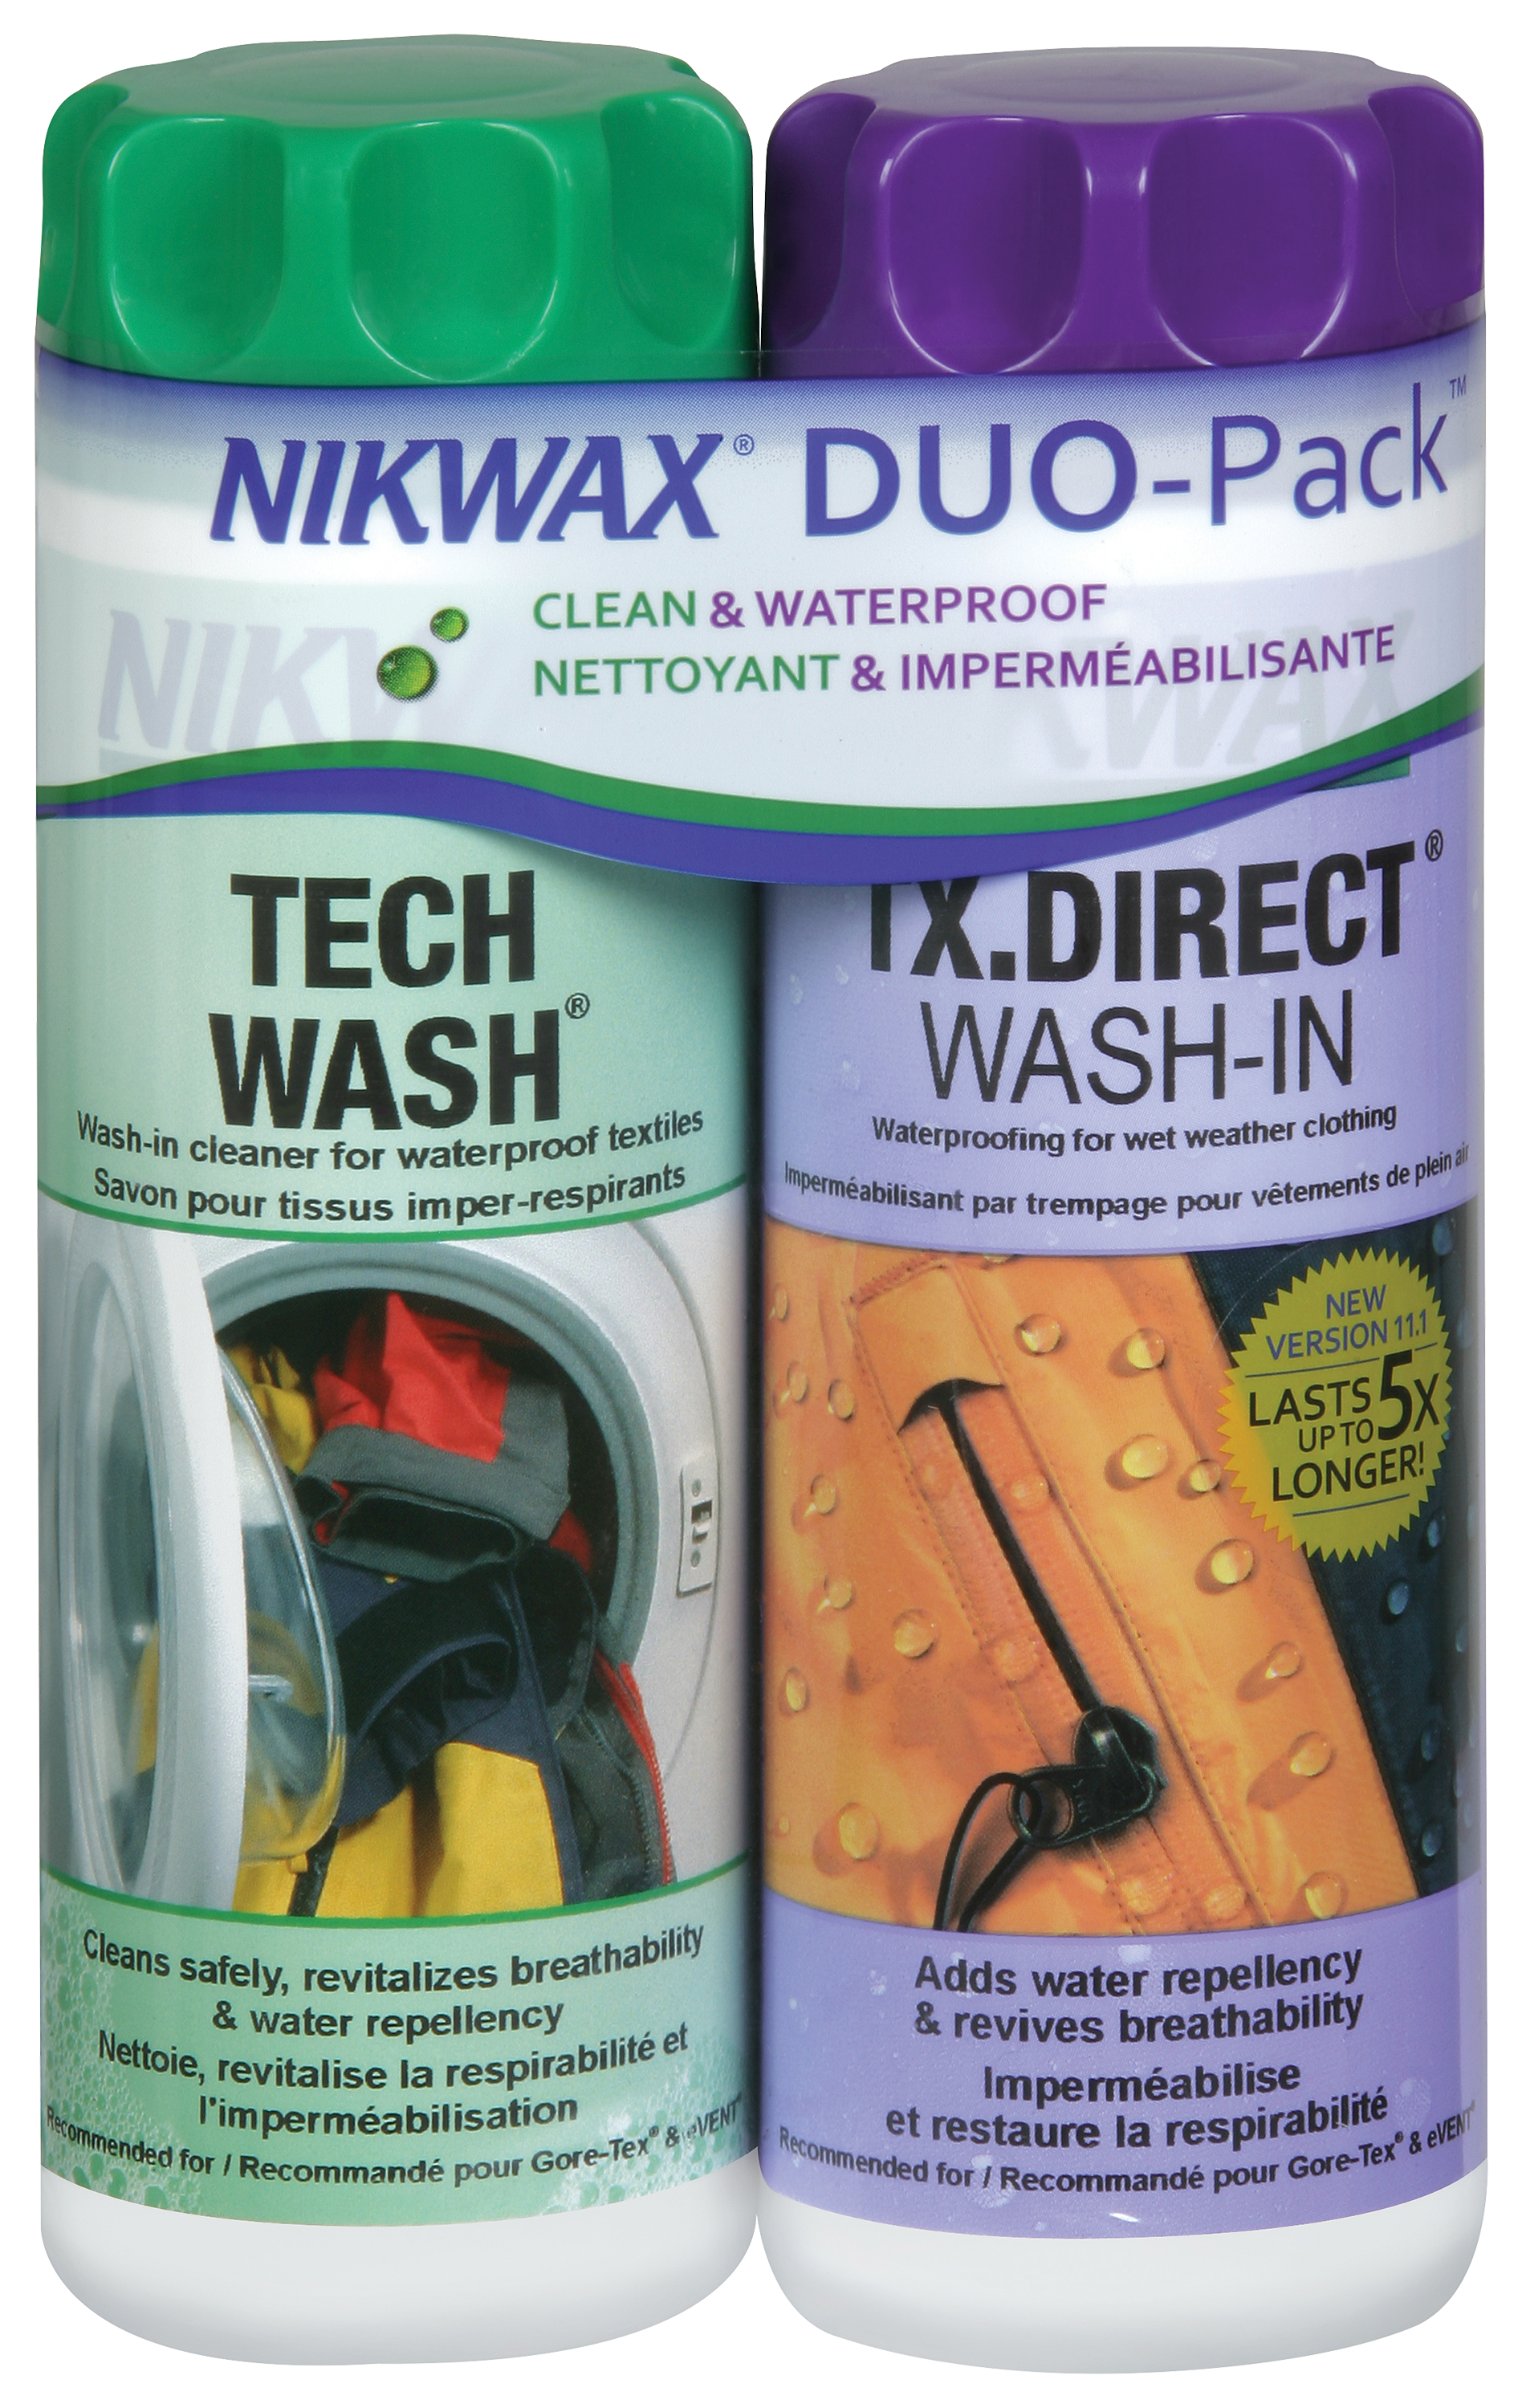 Nikwax TX.Direct Wash-In Fabric Waterproofing